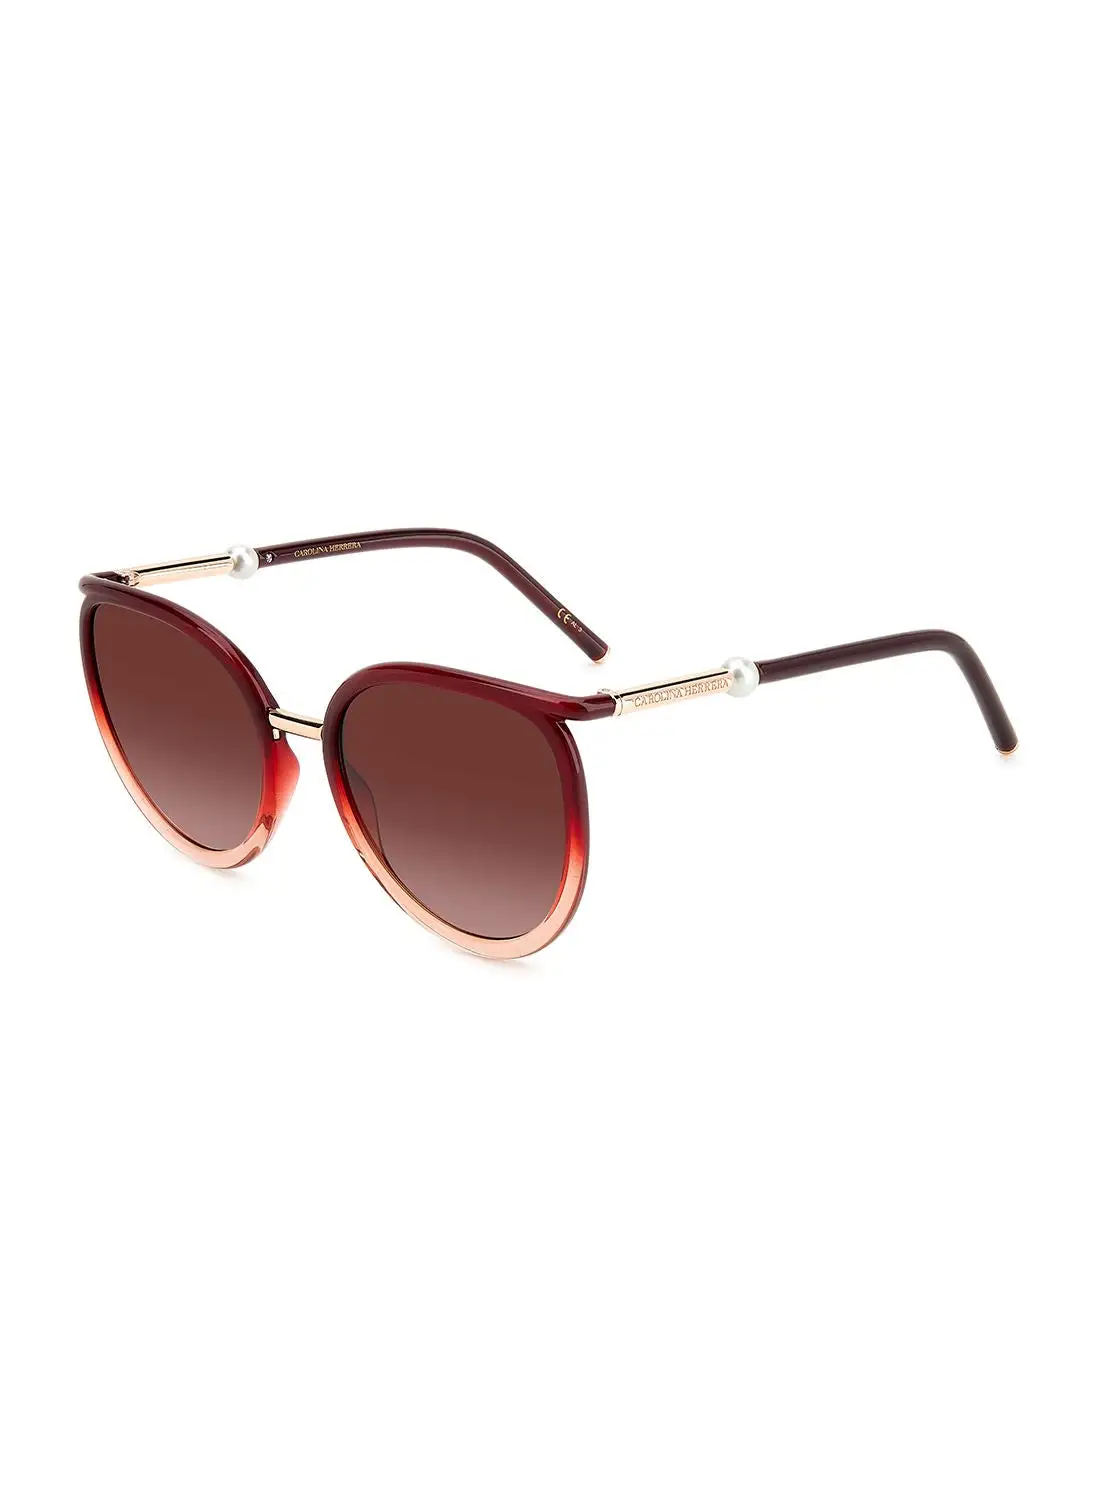 CAROLINA HERRERA Women's UV Protection Round Sunglasses - Her 0077/S Burg Nude 59 - Lens Size: 59 Mm